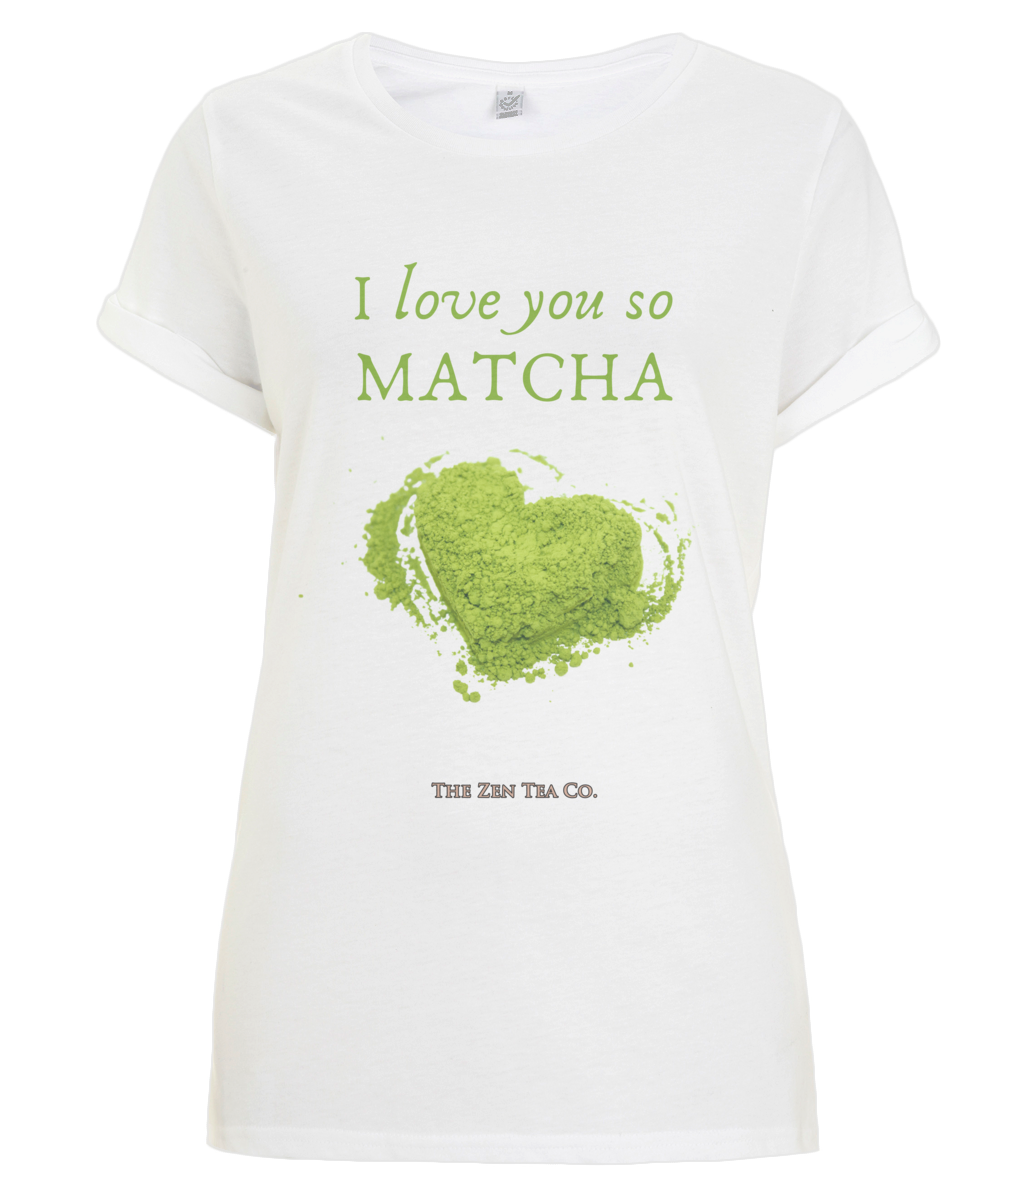 Organic & Vegan Rolled Up Sleeve Woman White T-shirt for Matcha Tea lovers - I love you so matcha